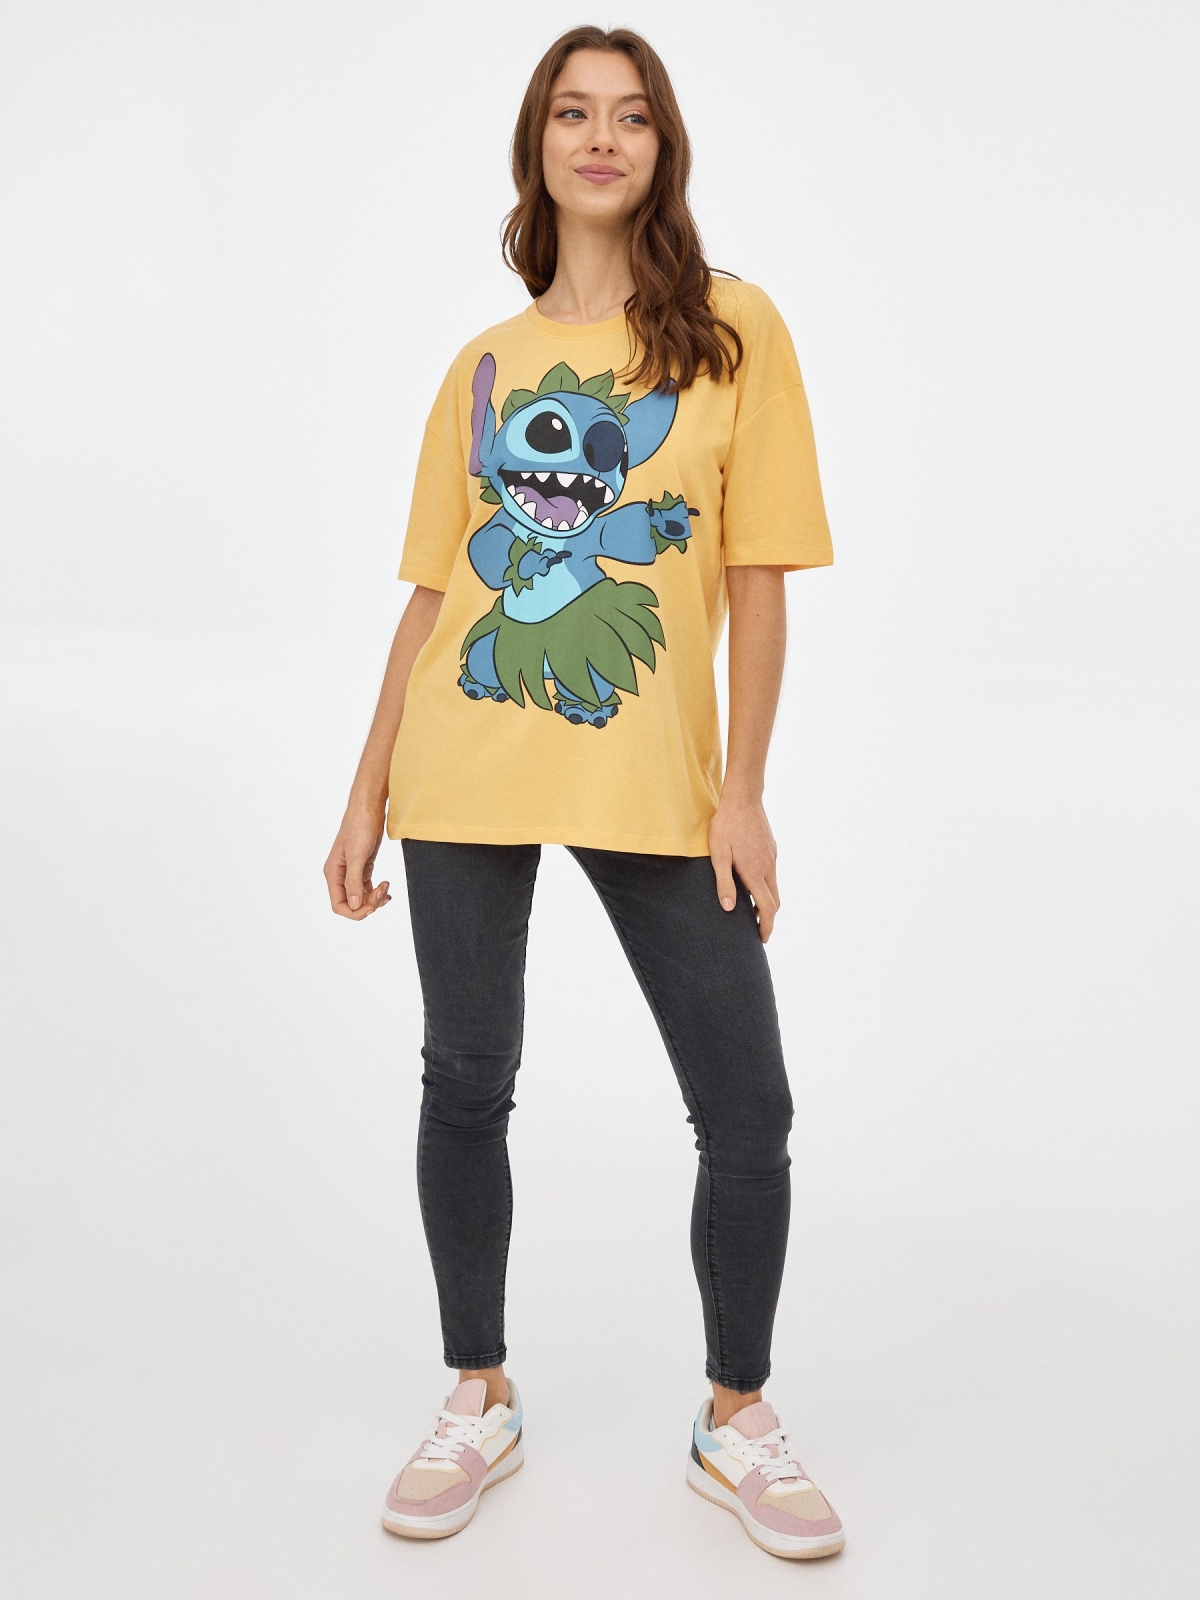 T-shirt oversized Stitch amarelo pastel vista geral frontal